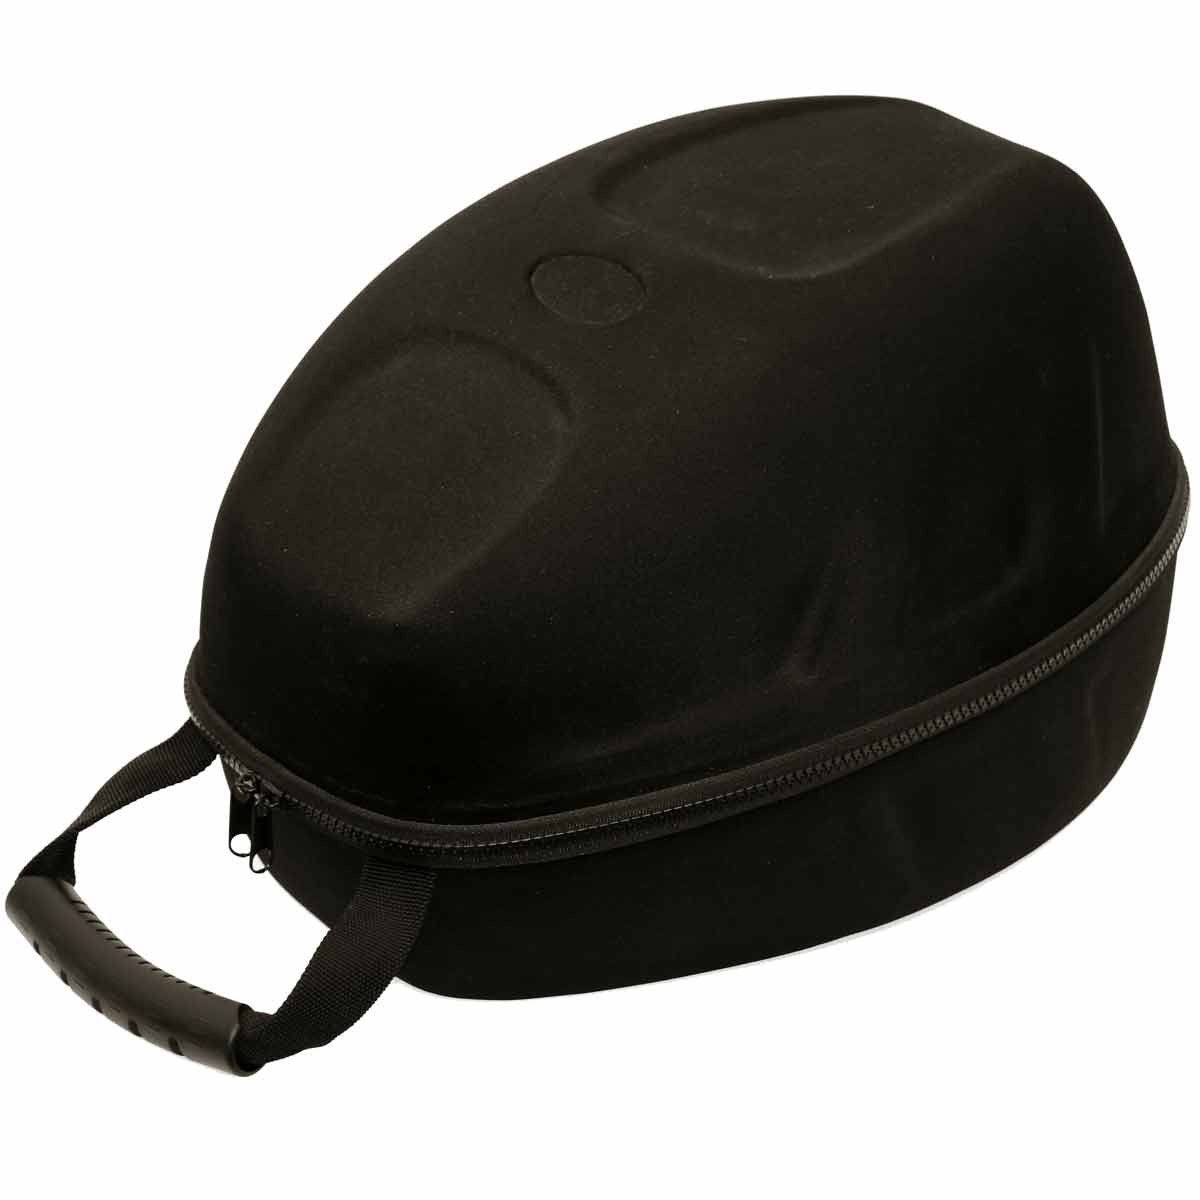 Helmet case black